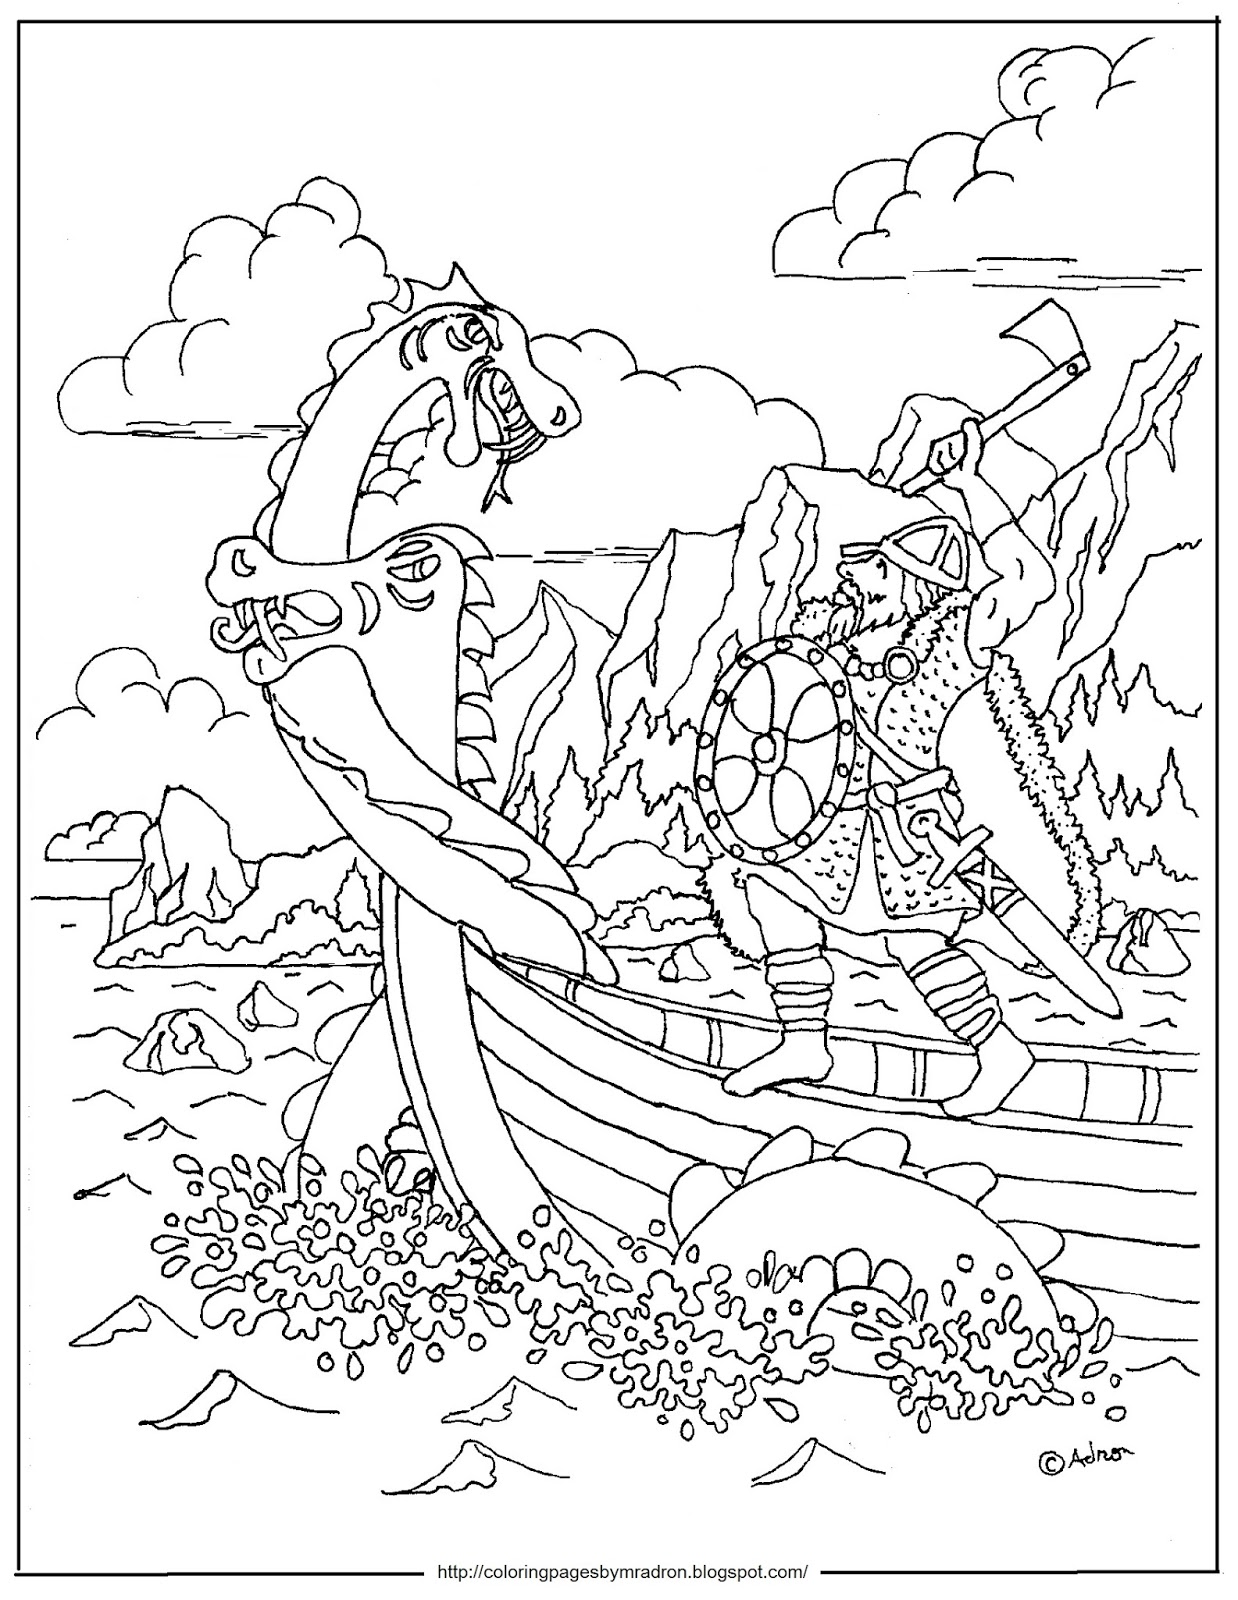 Dibujo para colorear: Vikingo (Personajes) #149426 - Dibujos para Colorear e Imprimir Gratis